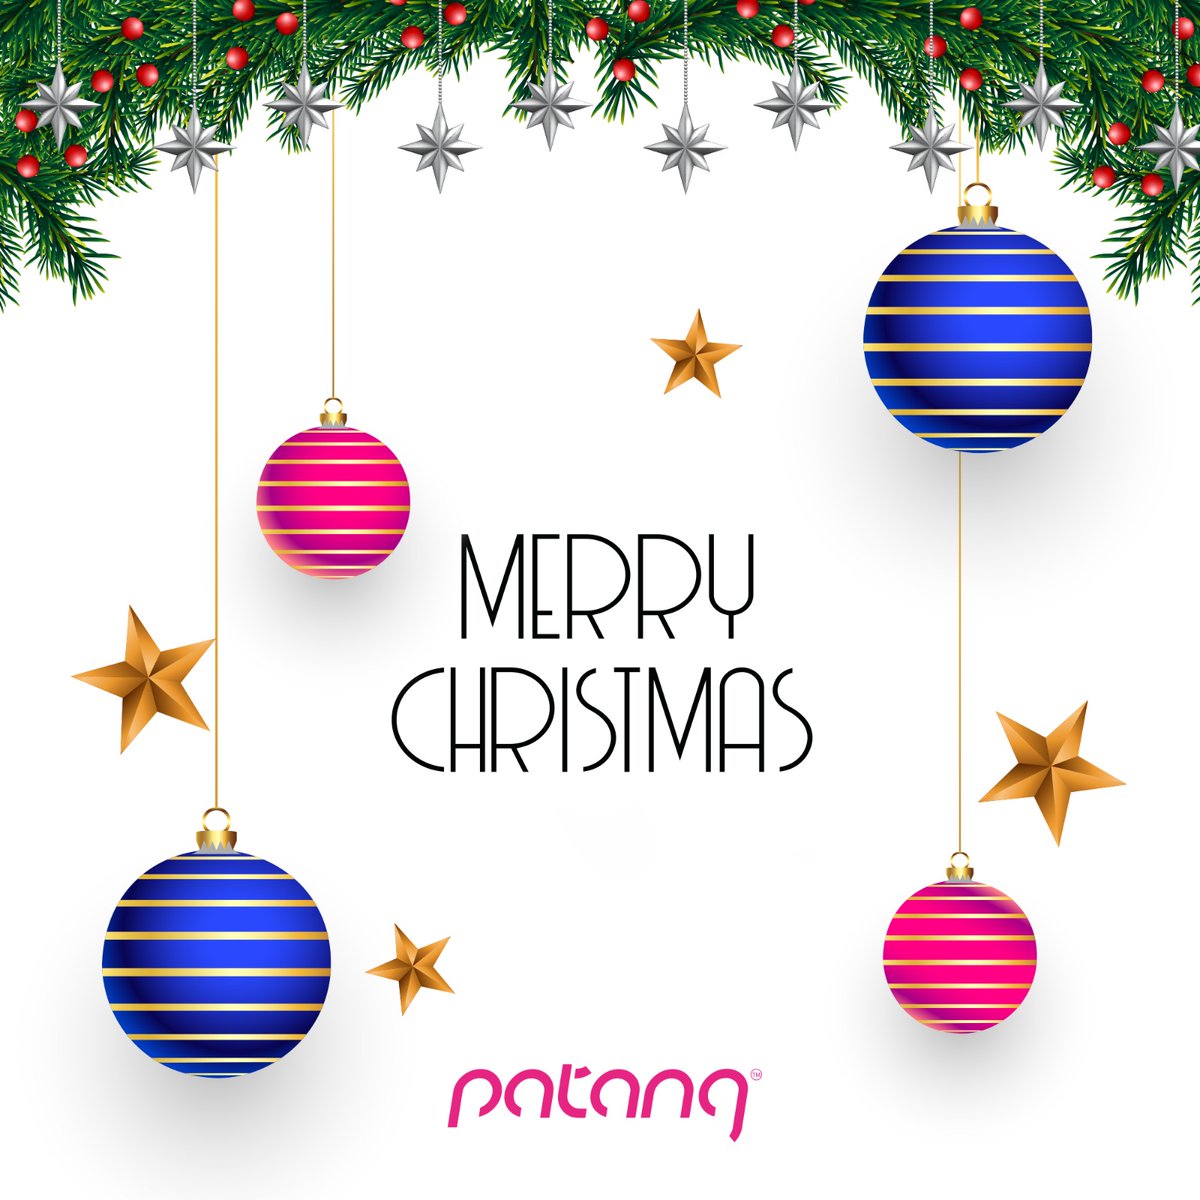 Wishing you a Merry Christmas and a joyous holiday season! 

#Patang #DigitalLogistics #MerryChristmas #Christmas2023 #FestiveGreetings